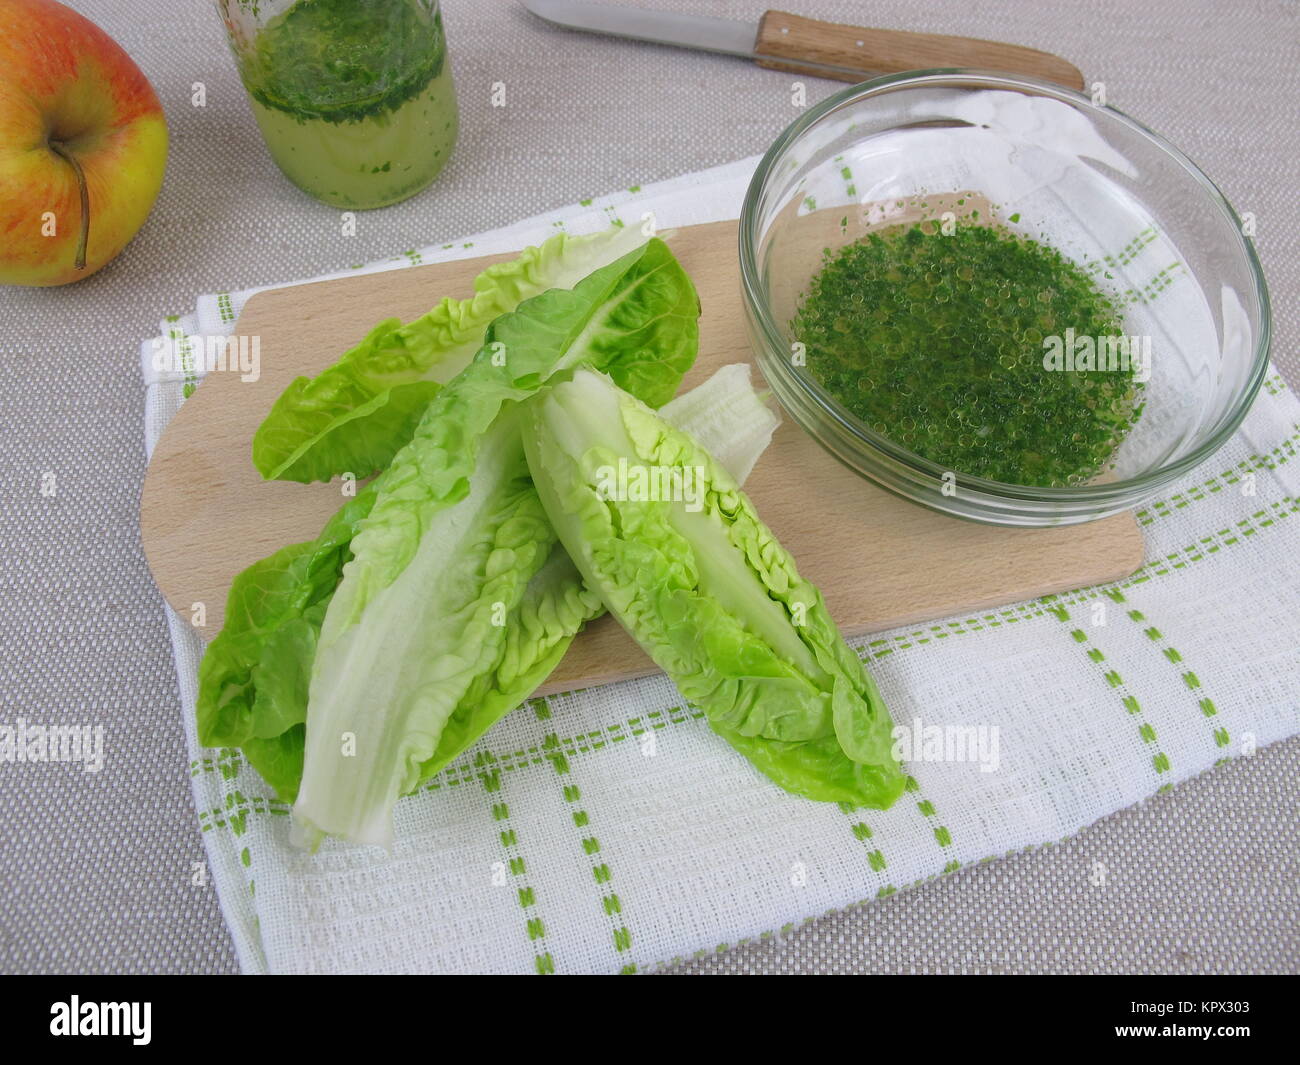 herb vinaigrette salad dressing and salad leaves Stock Photo